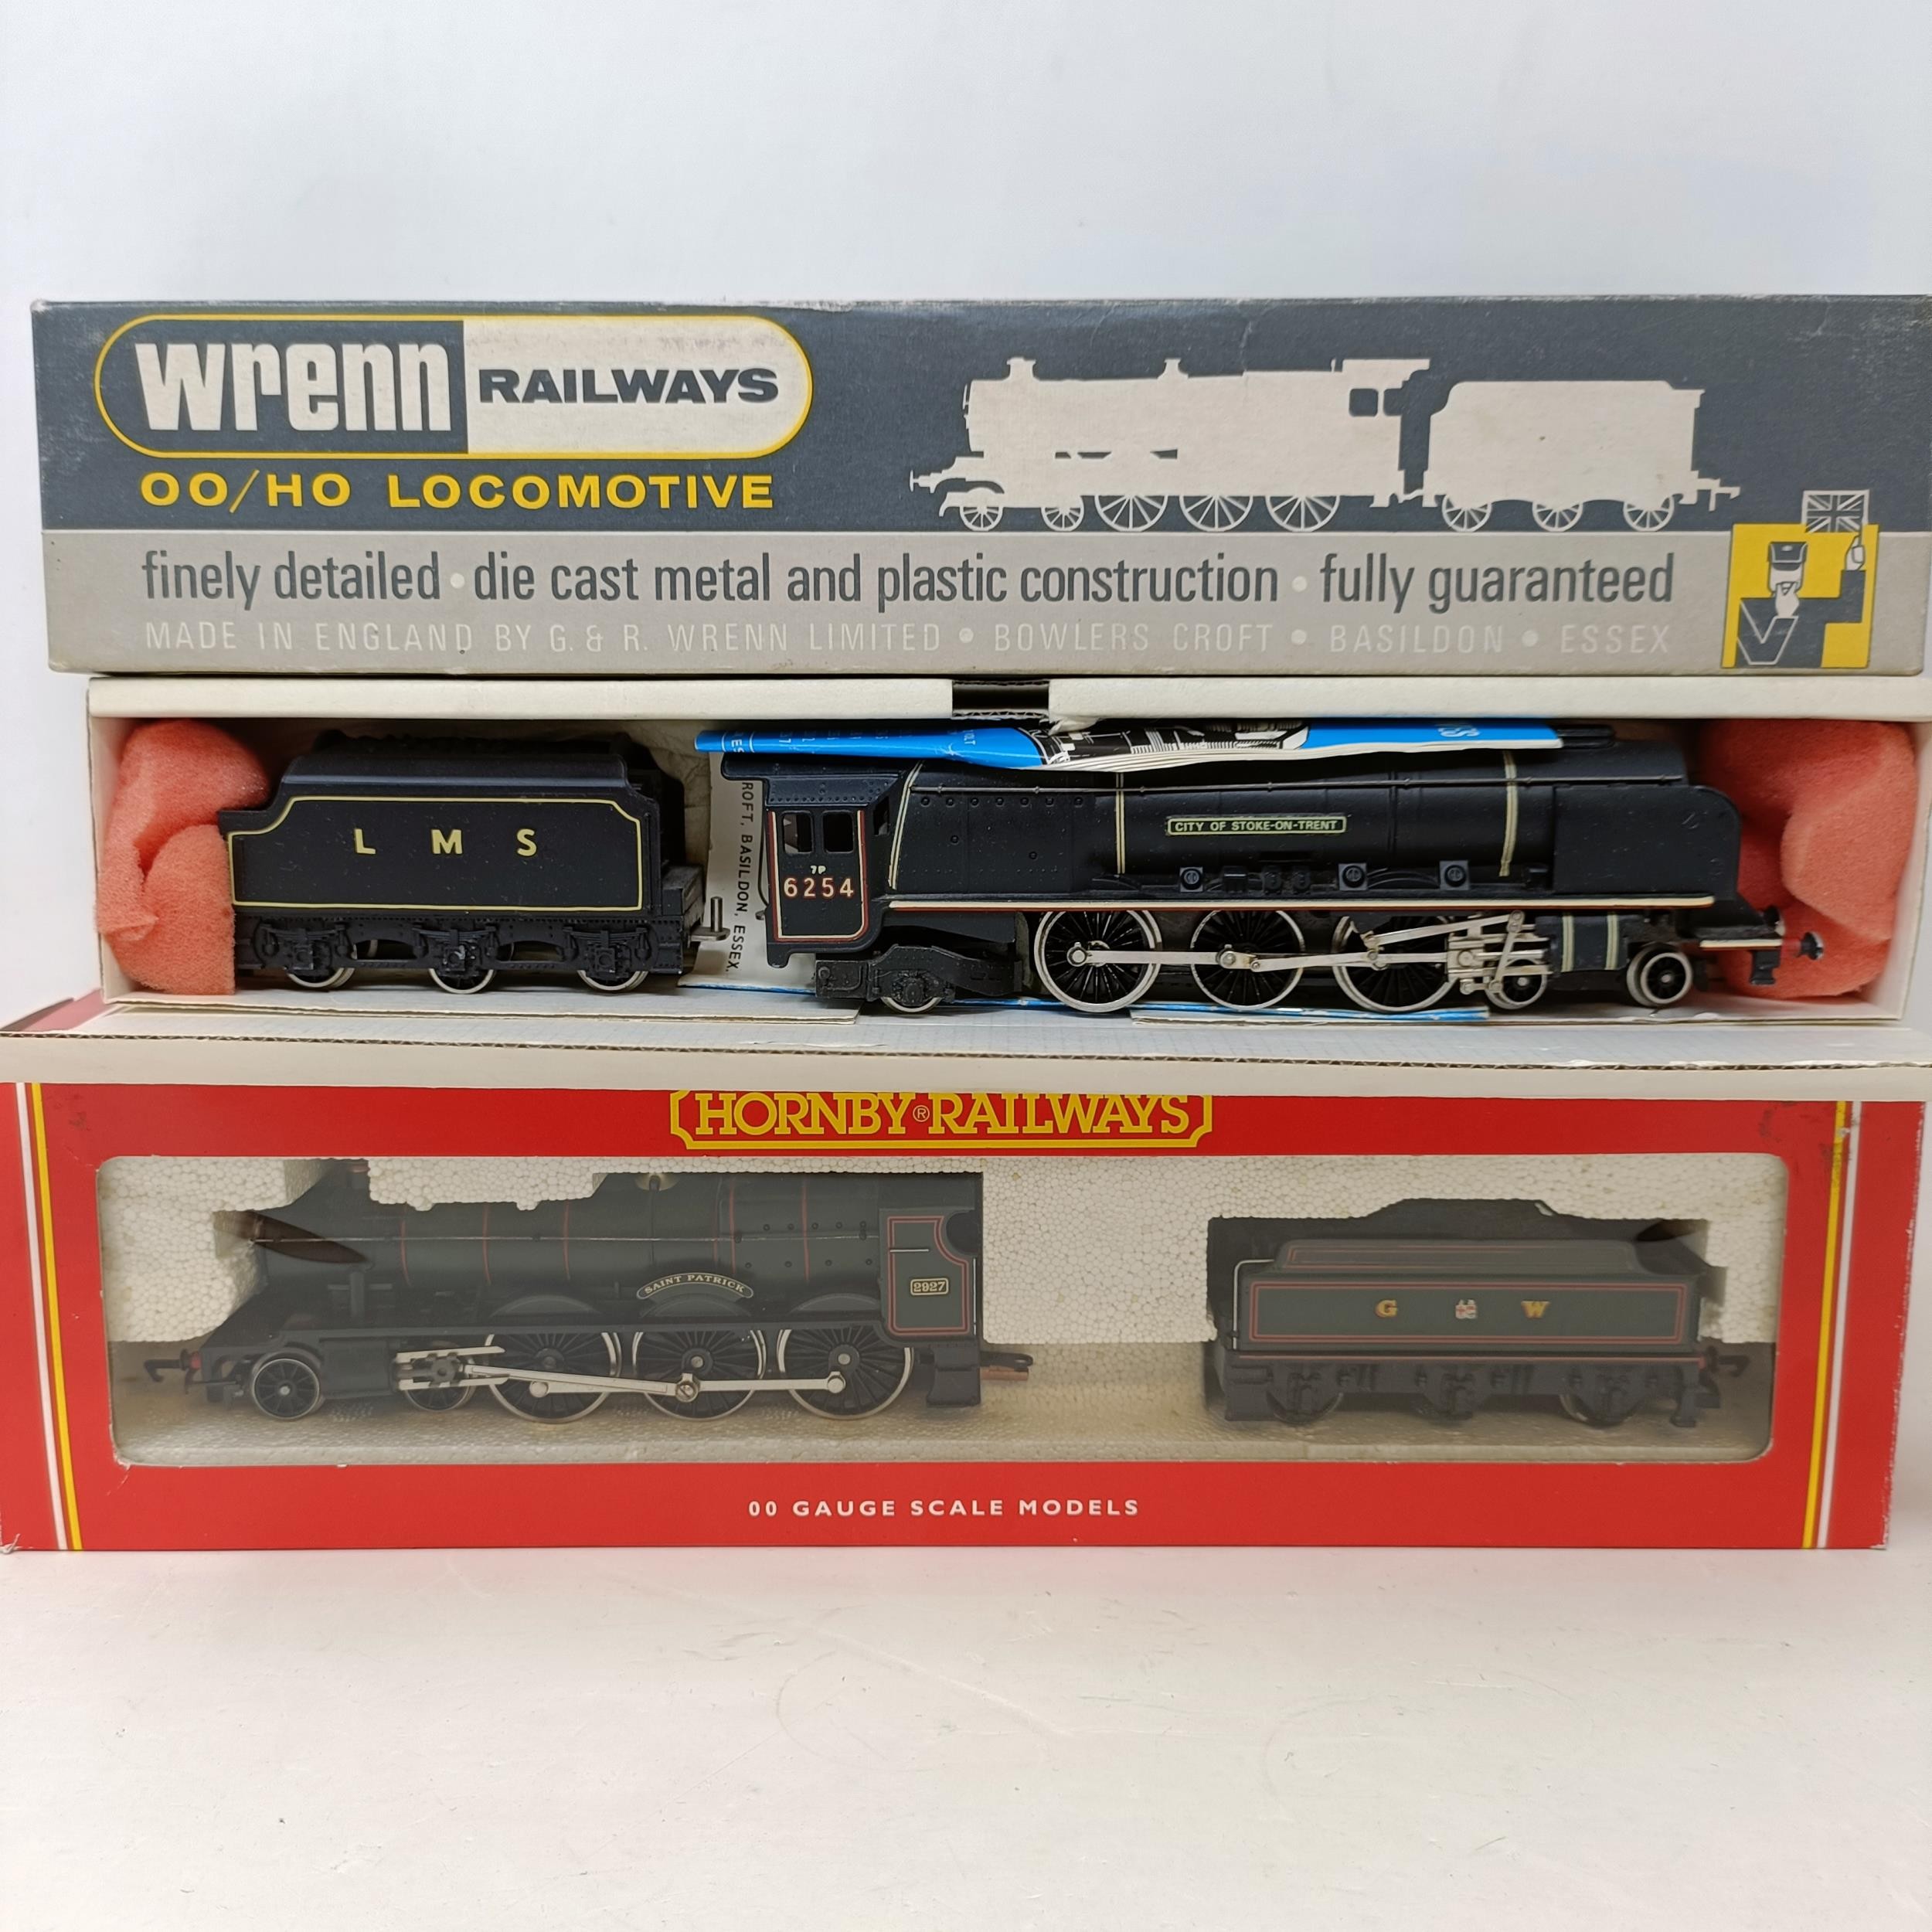 A Wrenn OO gauge 4-6-2 locomotive and tender, No. W2227, a Hornby OO gauge 4-6-0 locomotive and - Image 5 of 7